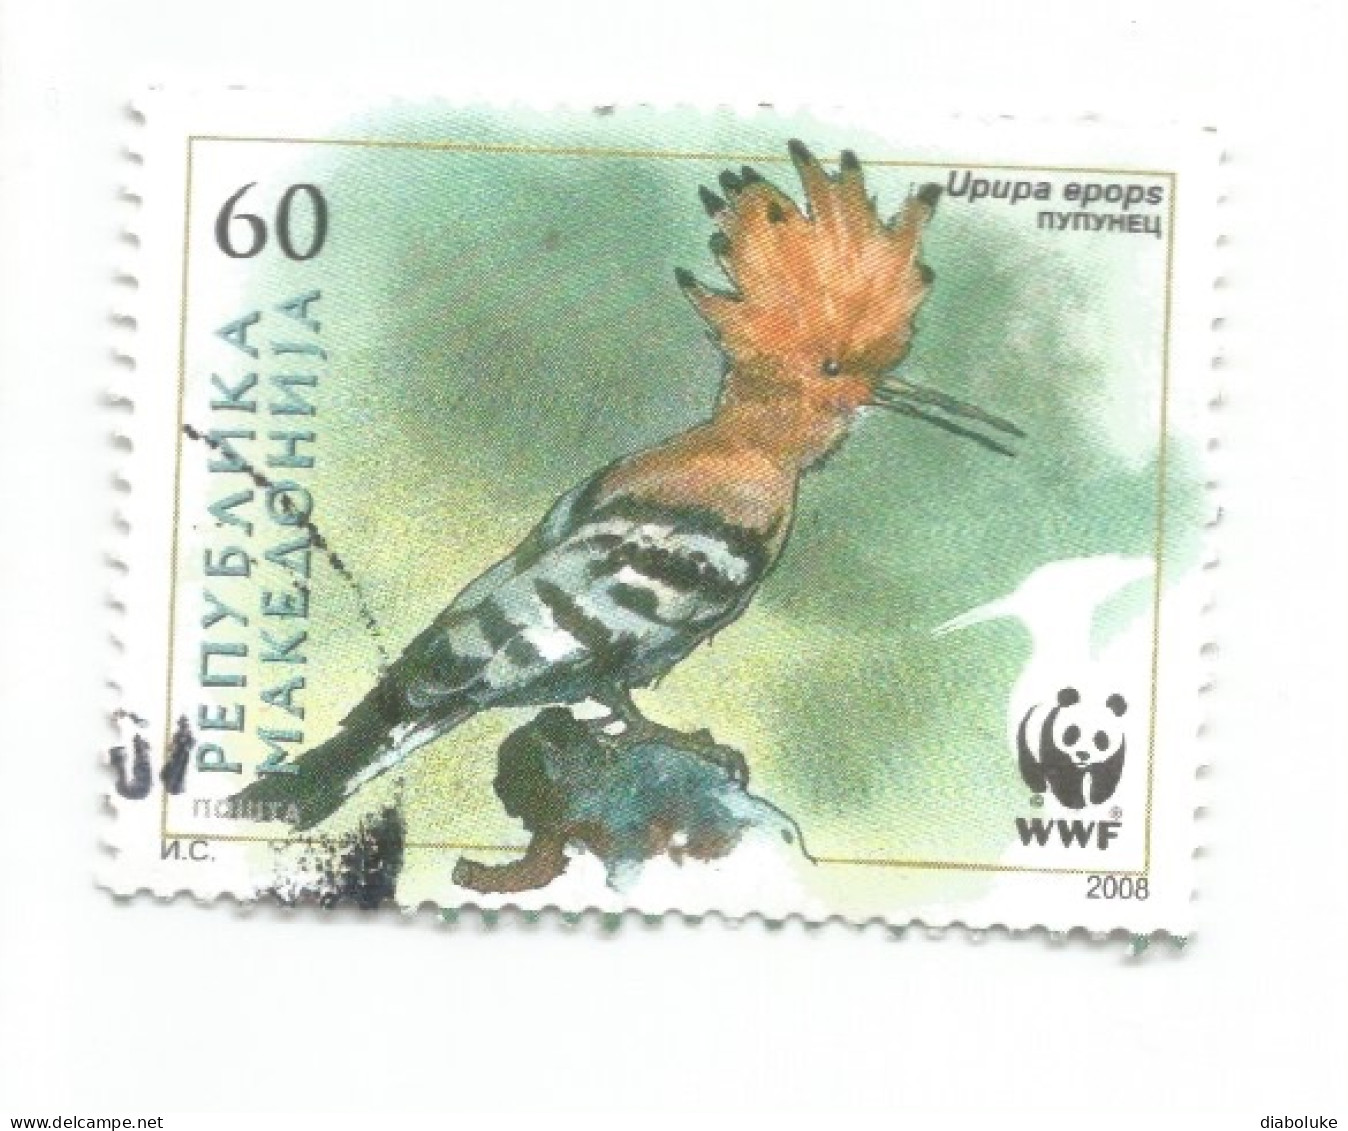 (MACEDONIA) 2006, WWF, EURASIAN HOOPOE, UPUPA EPOPS - Used Stamp - Noord-Macedonië